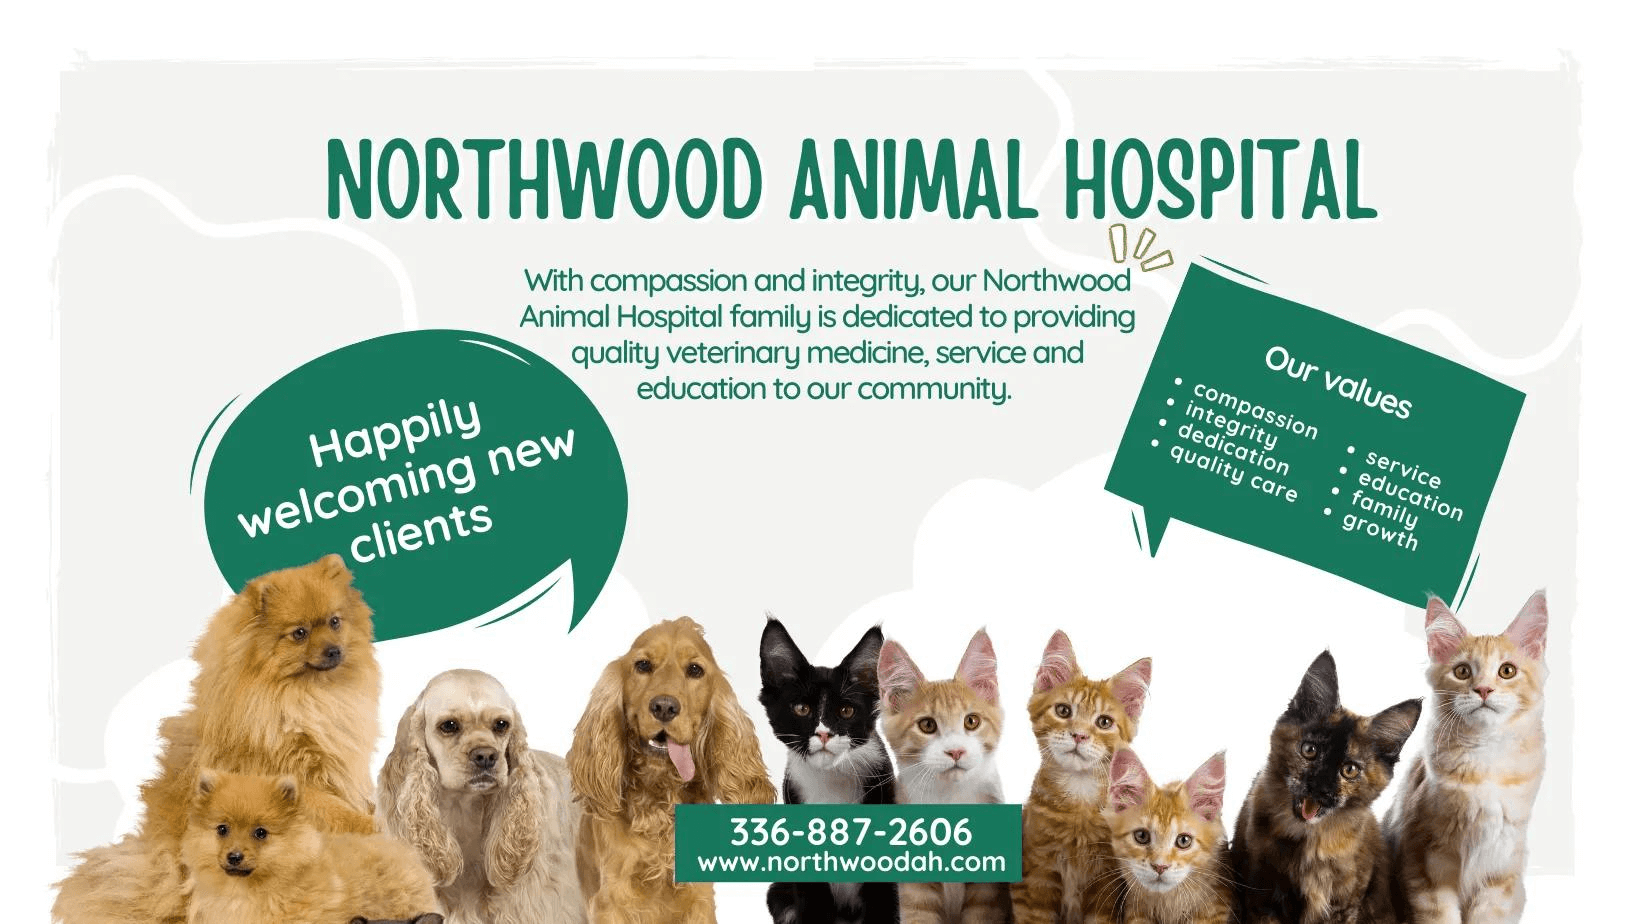 Northwood Animal Hospital values and about image